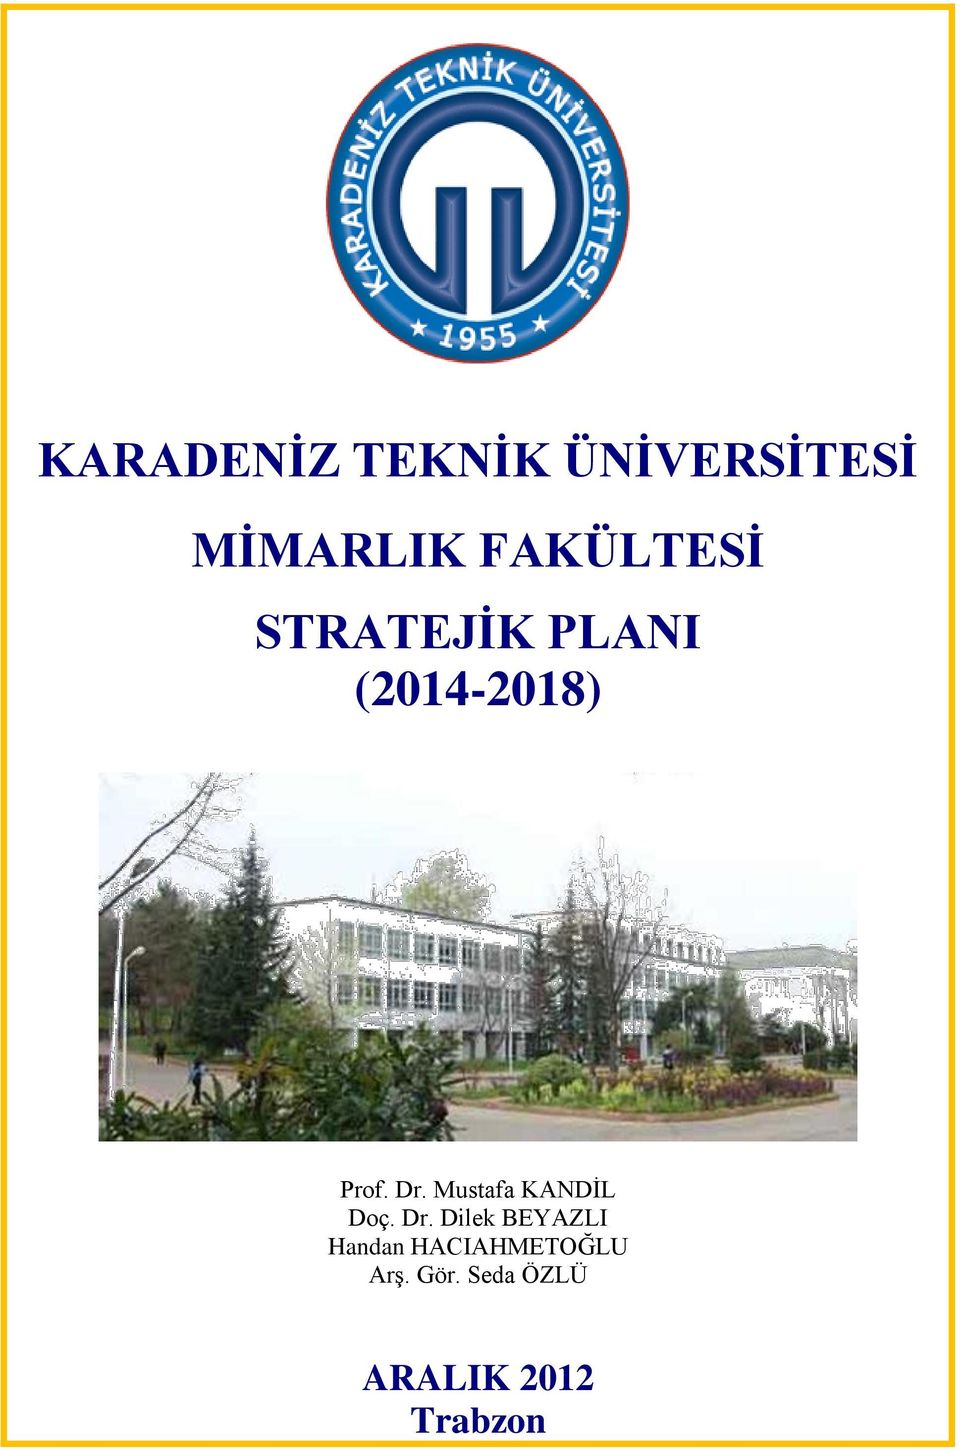 Mustafa KANDİL Doç. Dr.